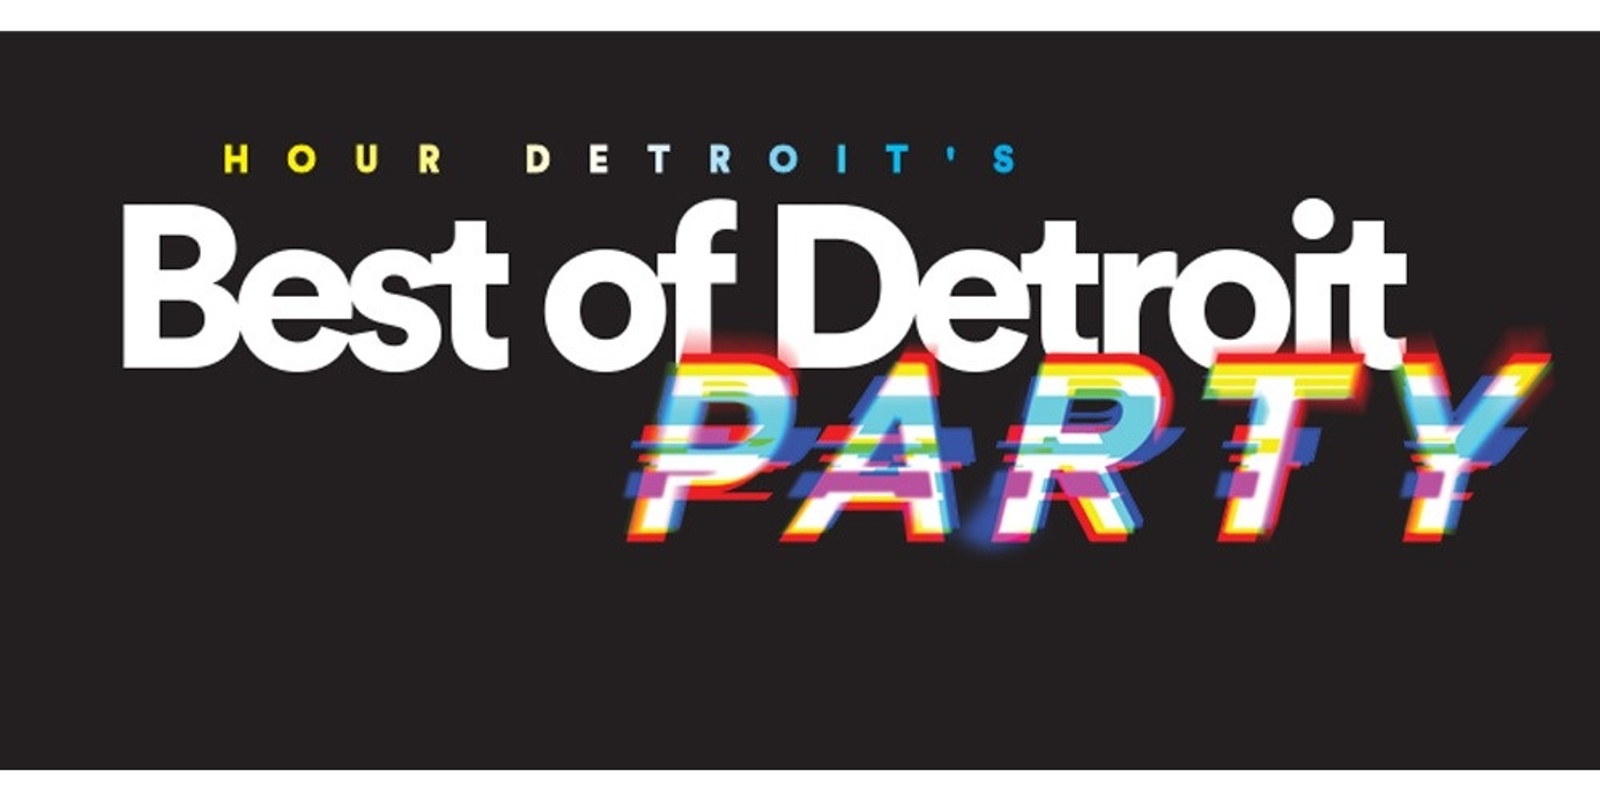 2023 Hour Detroiters - Hour Detroit Magazine